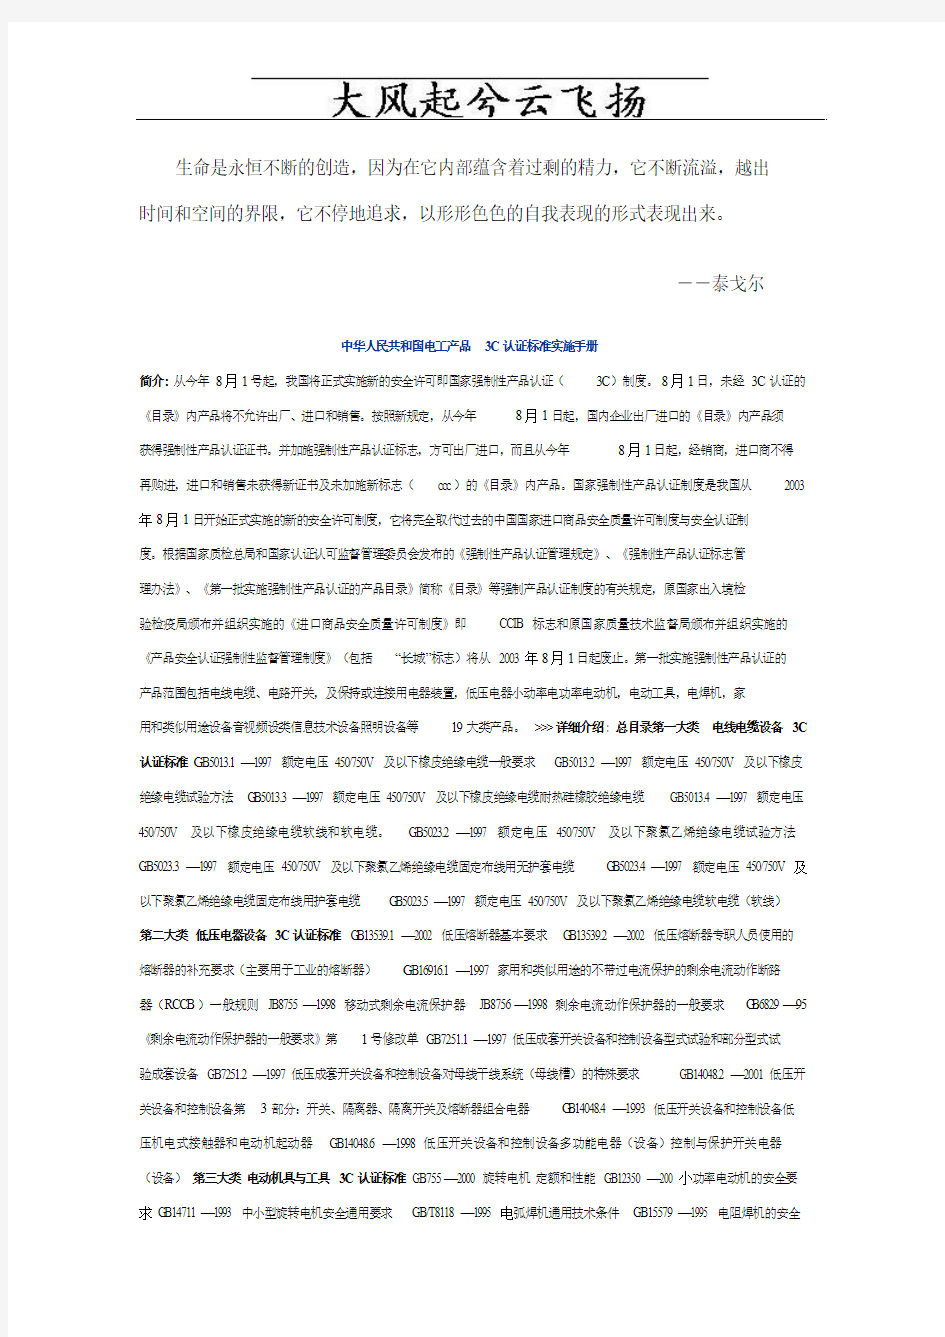 Aejazfu中华人民共和国电工产品3C认证标准实施手册